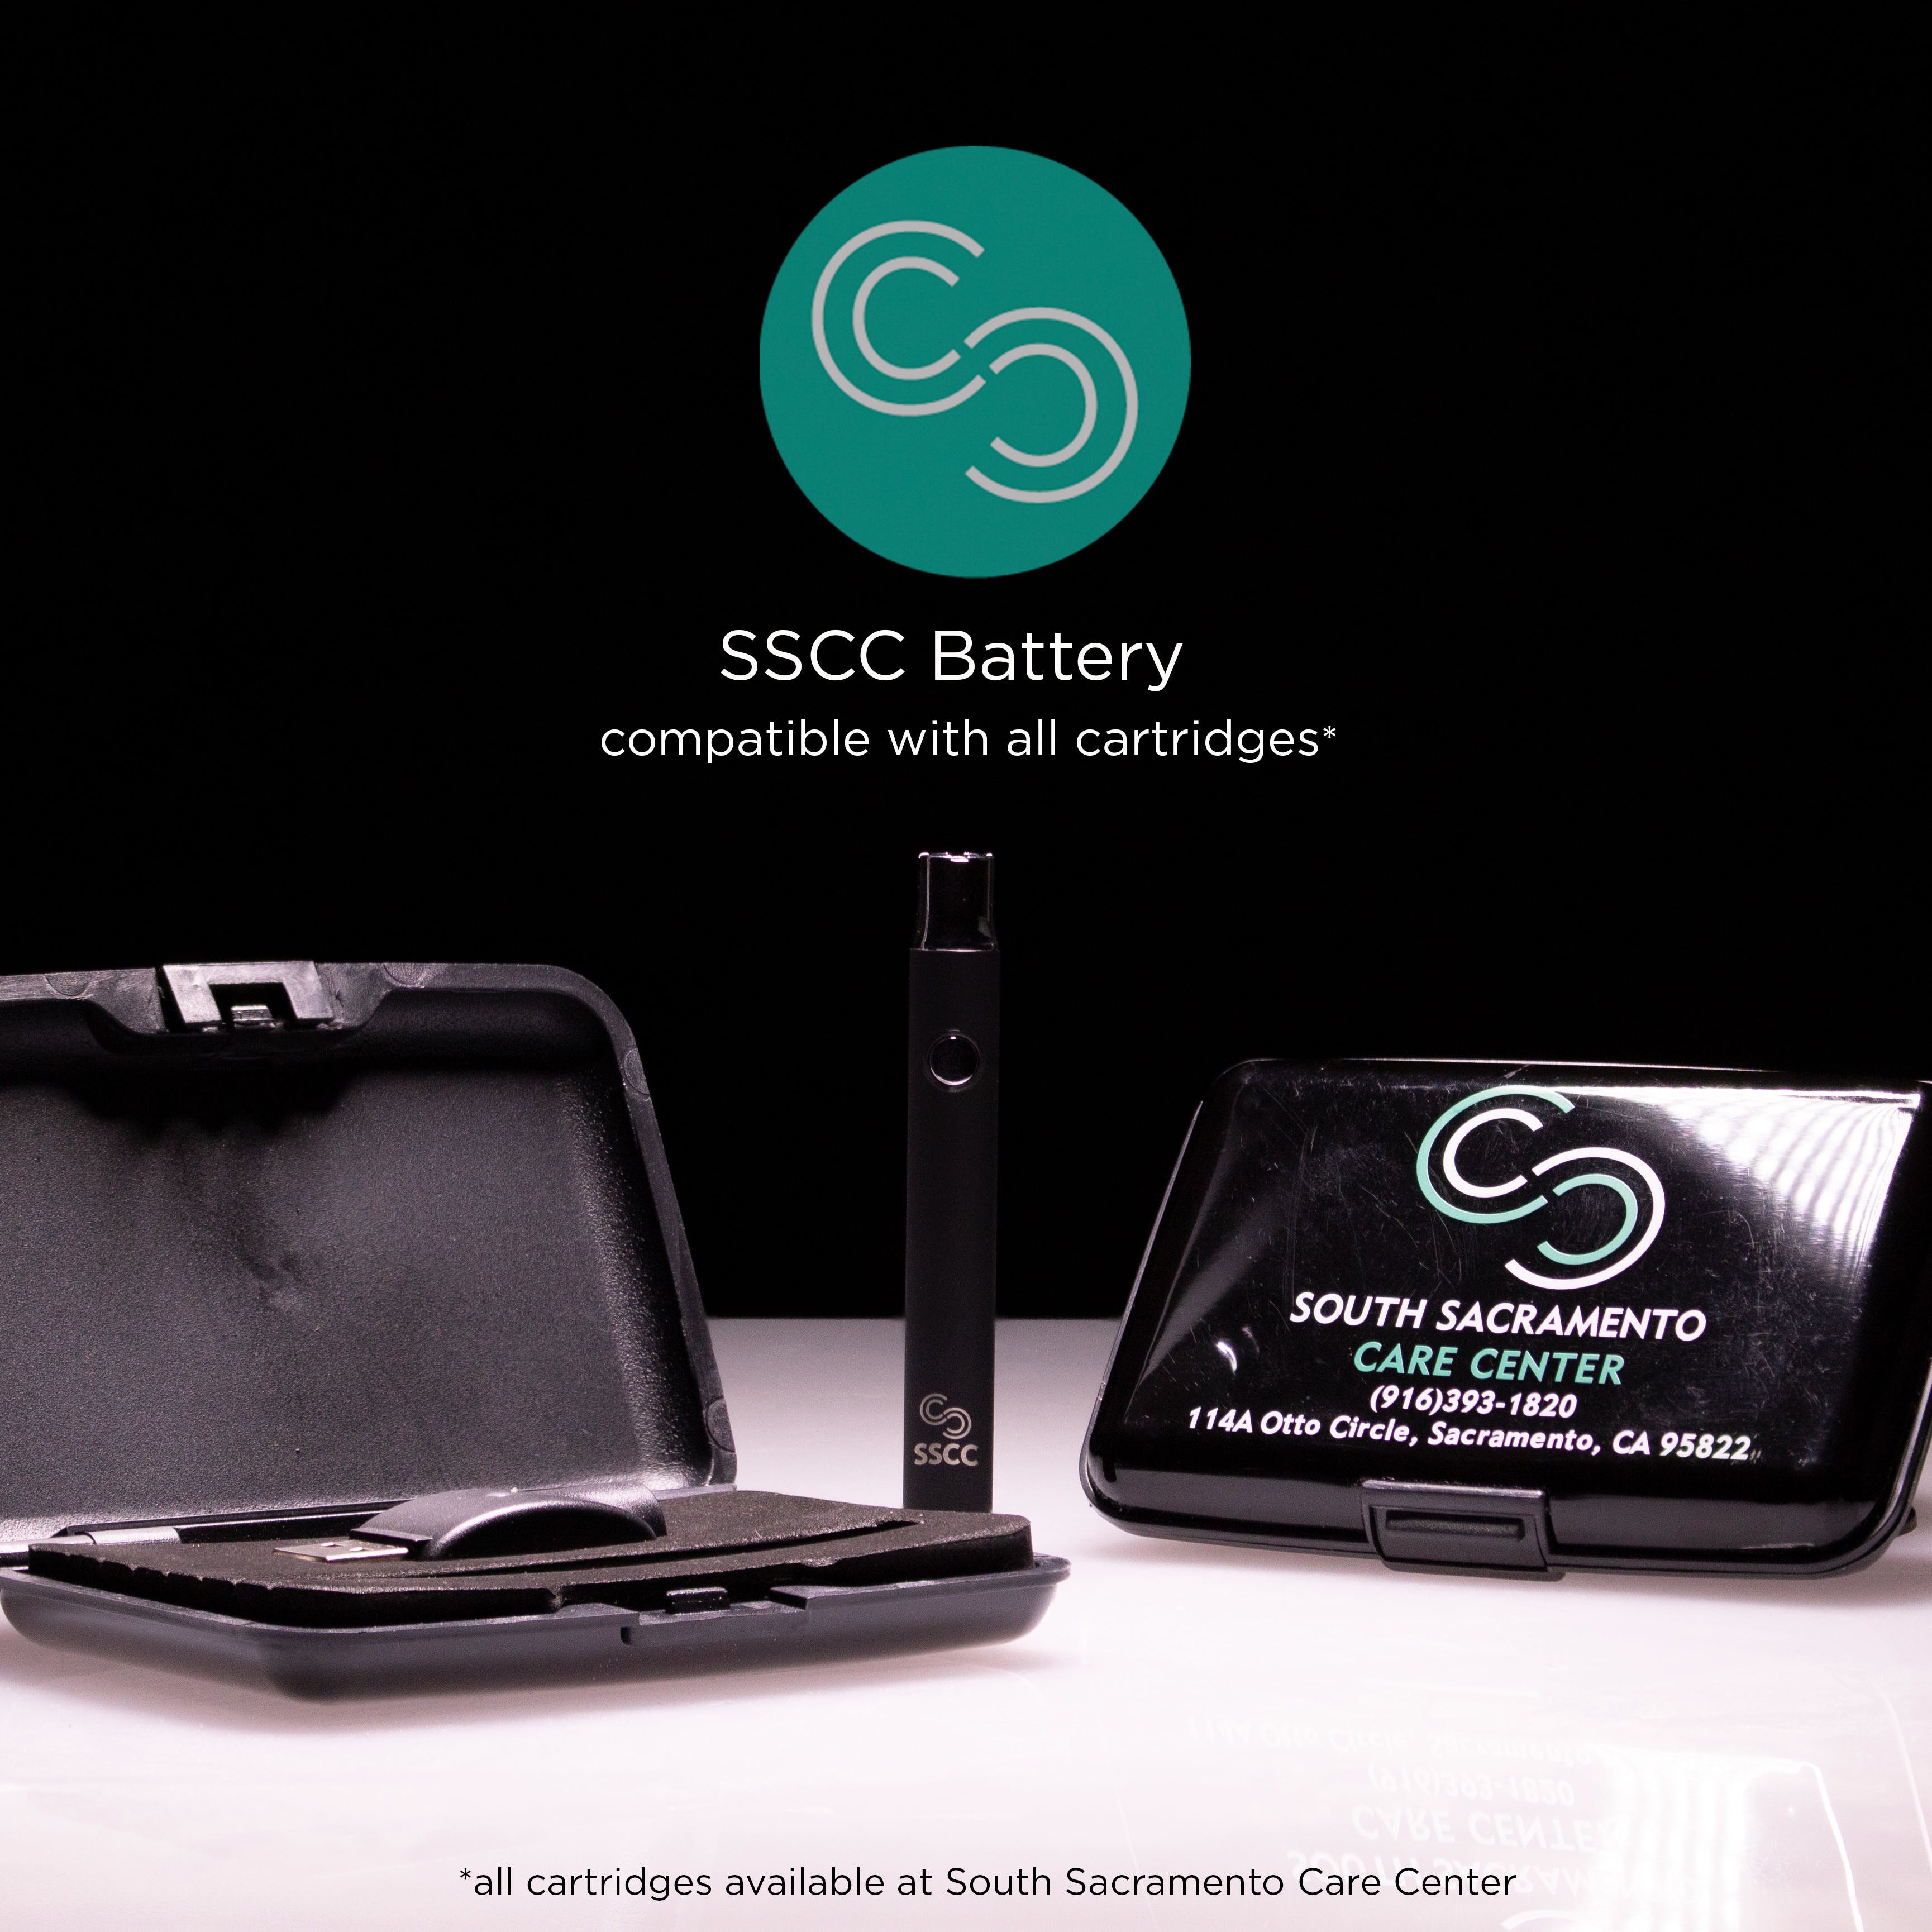 SSCC Battery